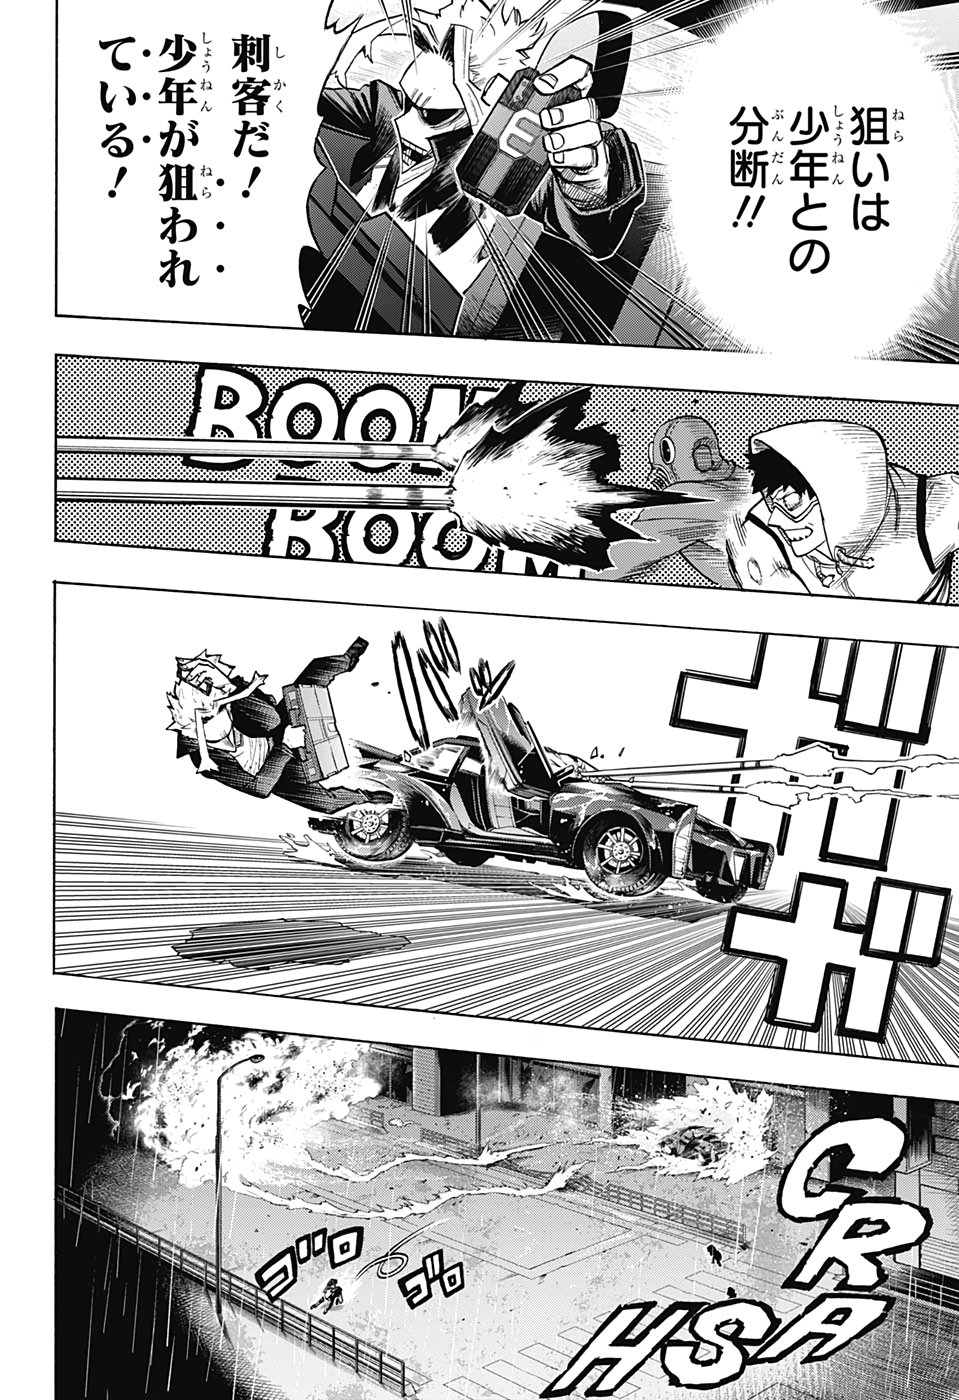 Boku no Hero Academia - Chapter 313 - Page 2